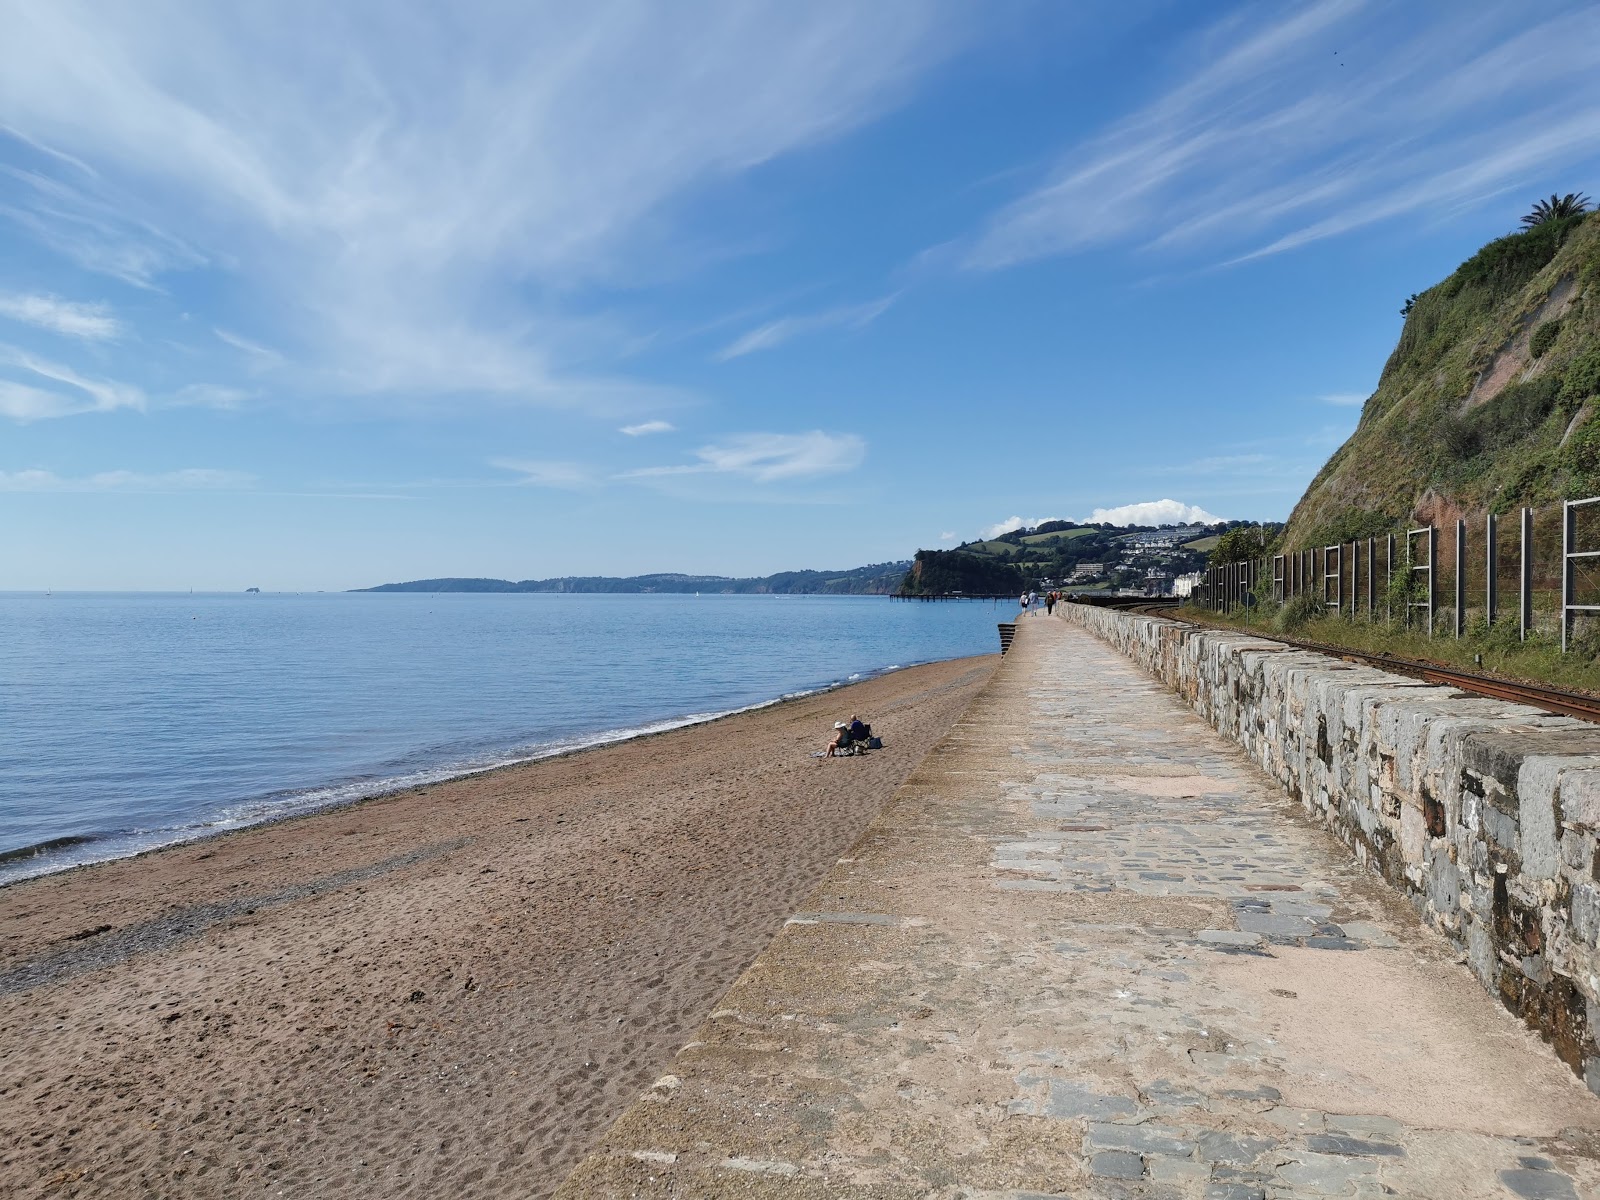 Foto de Praia de Teignmouth - lugar popular entre os apreciadores de relaxamento